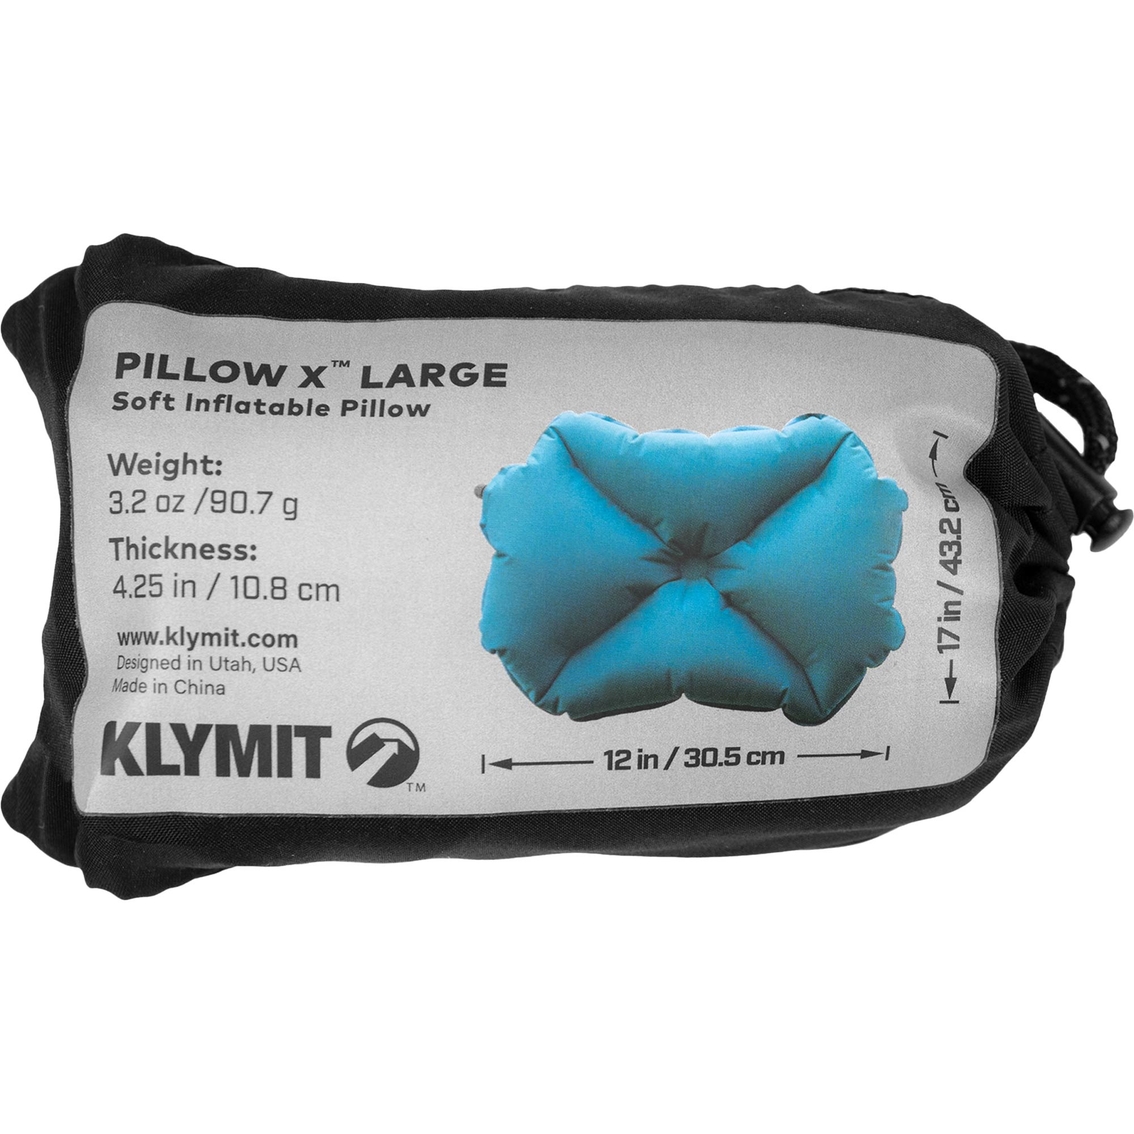 Argon Technologies Inc Pillow X Large - Image 4 of 8